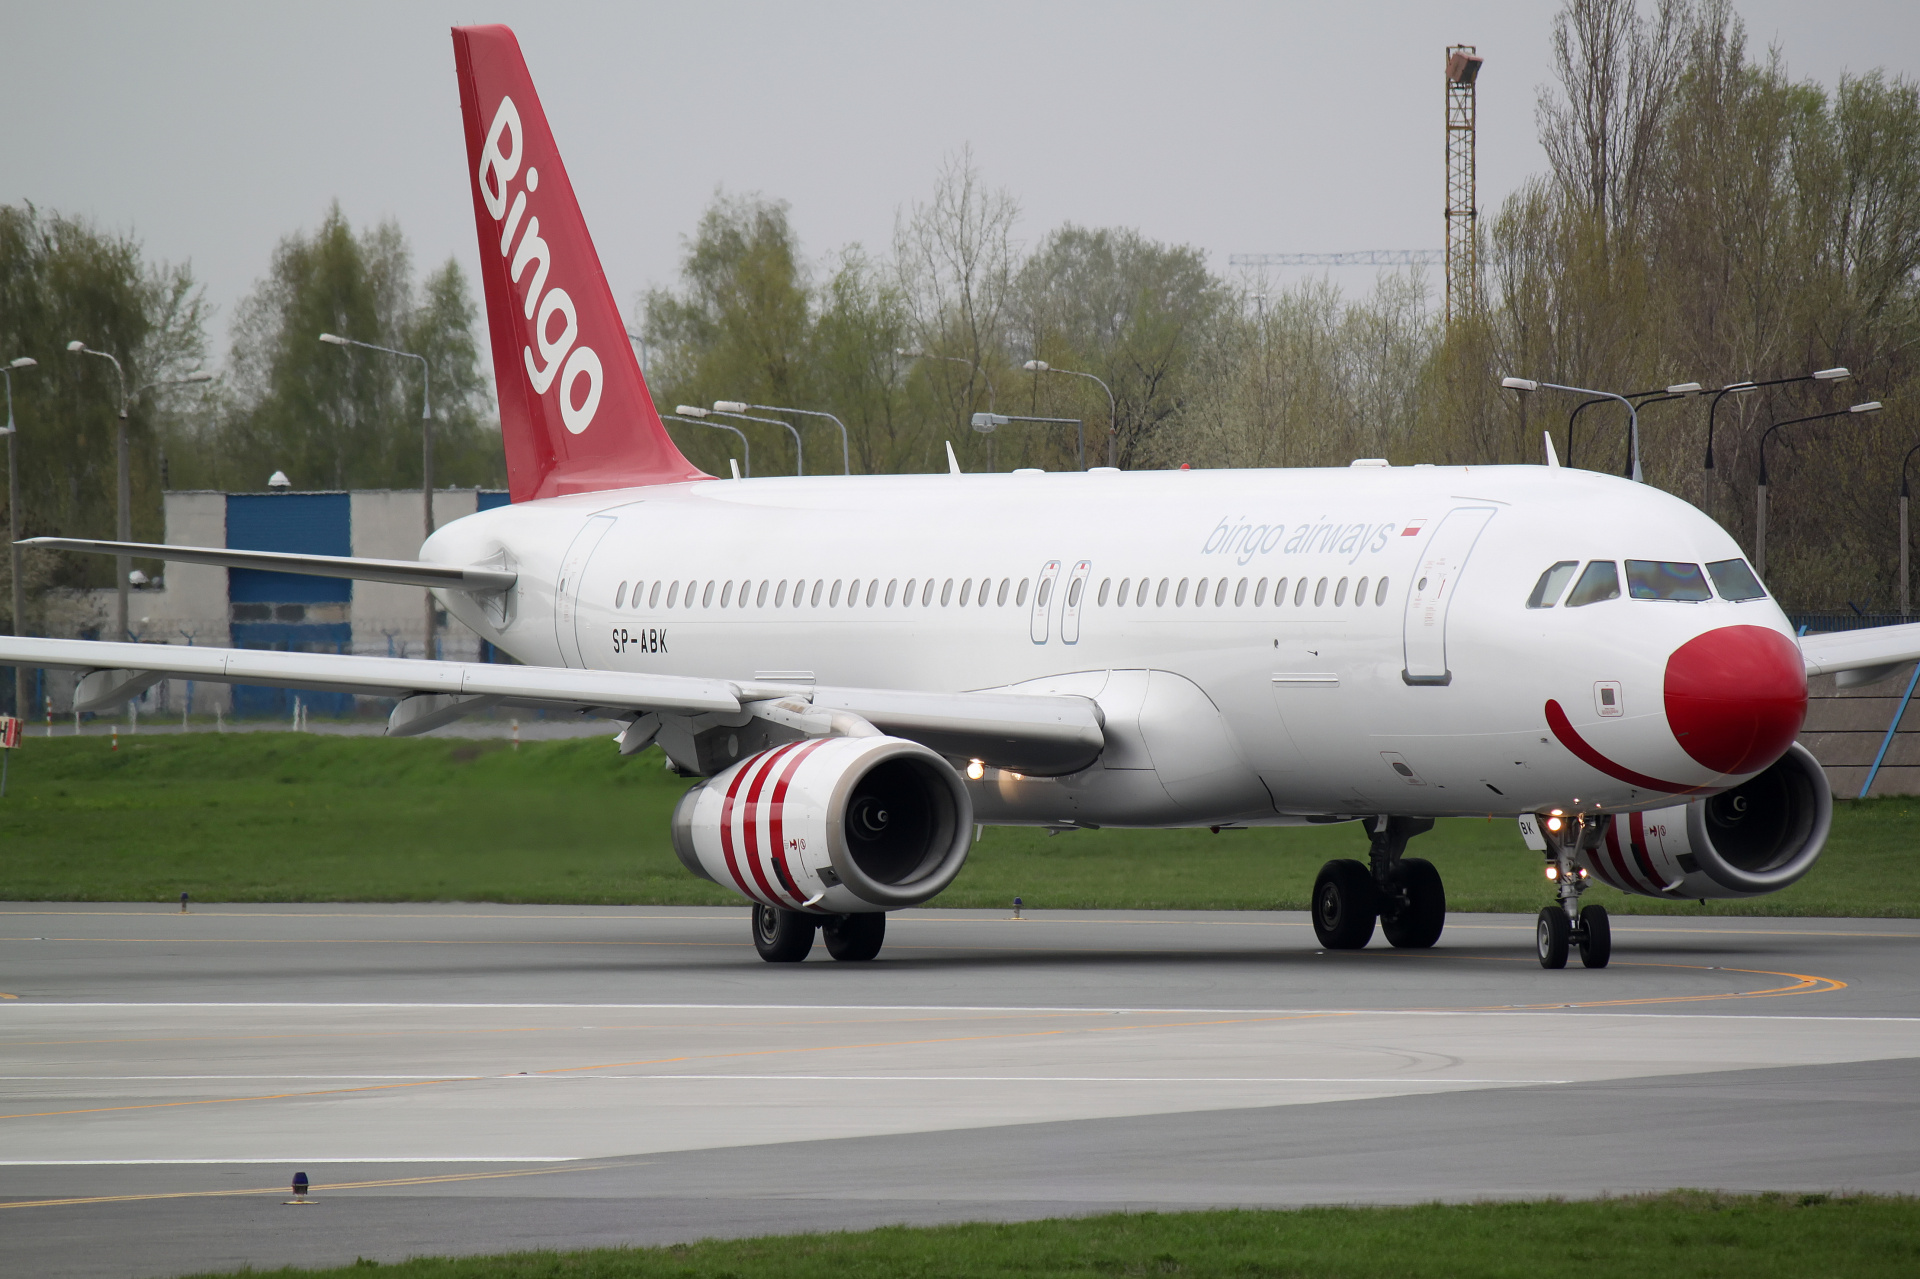 SP-ABK, Bingo Airways (Aircraft » EPWA Spotting » Airbus A320-200)